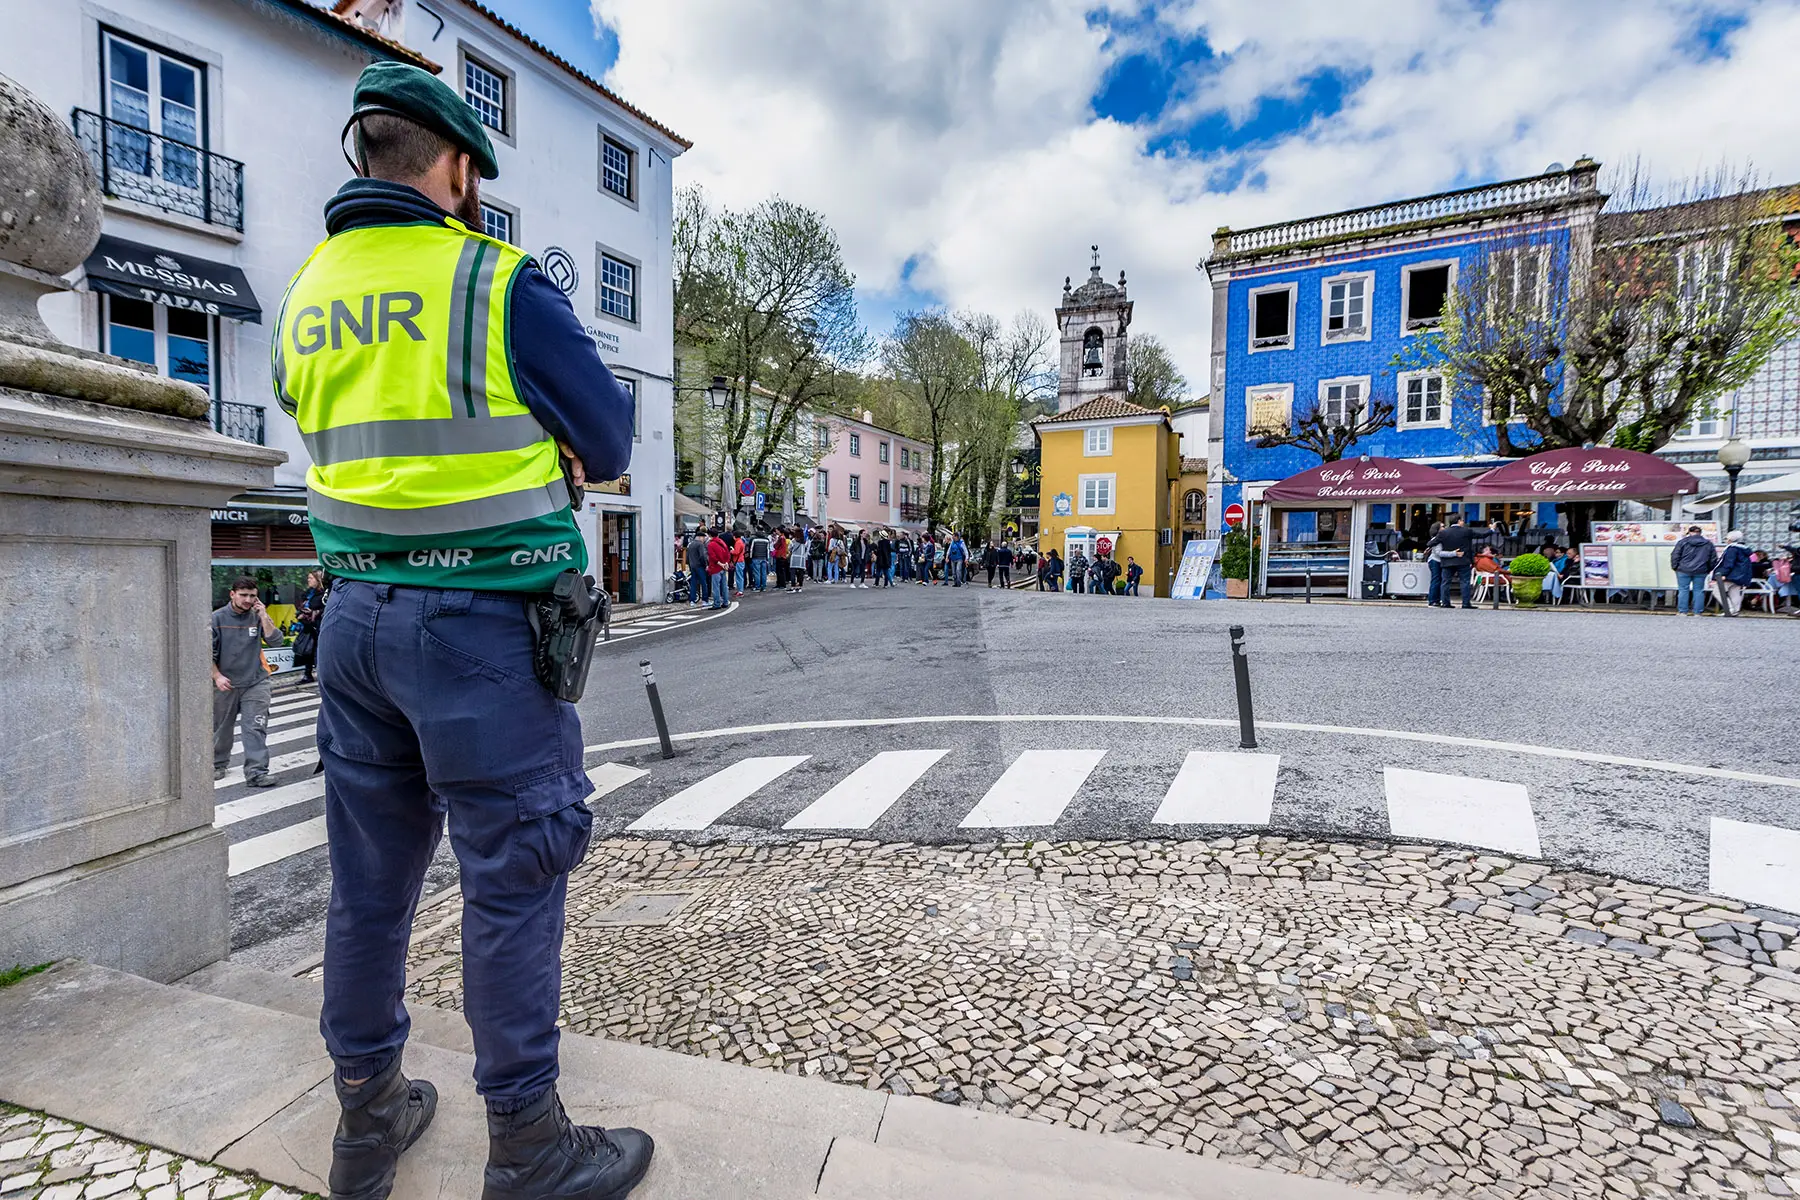 GNR police officer in Sintra